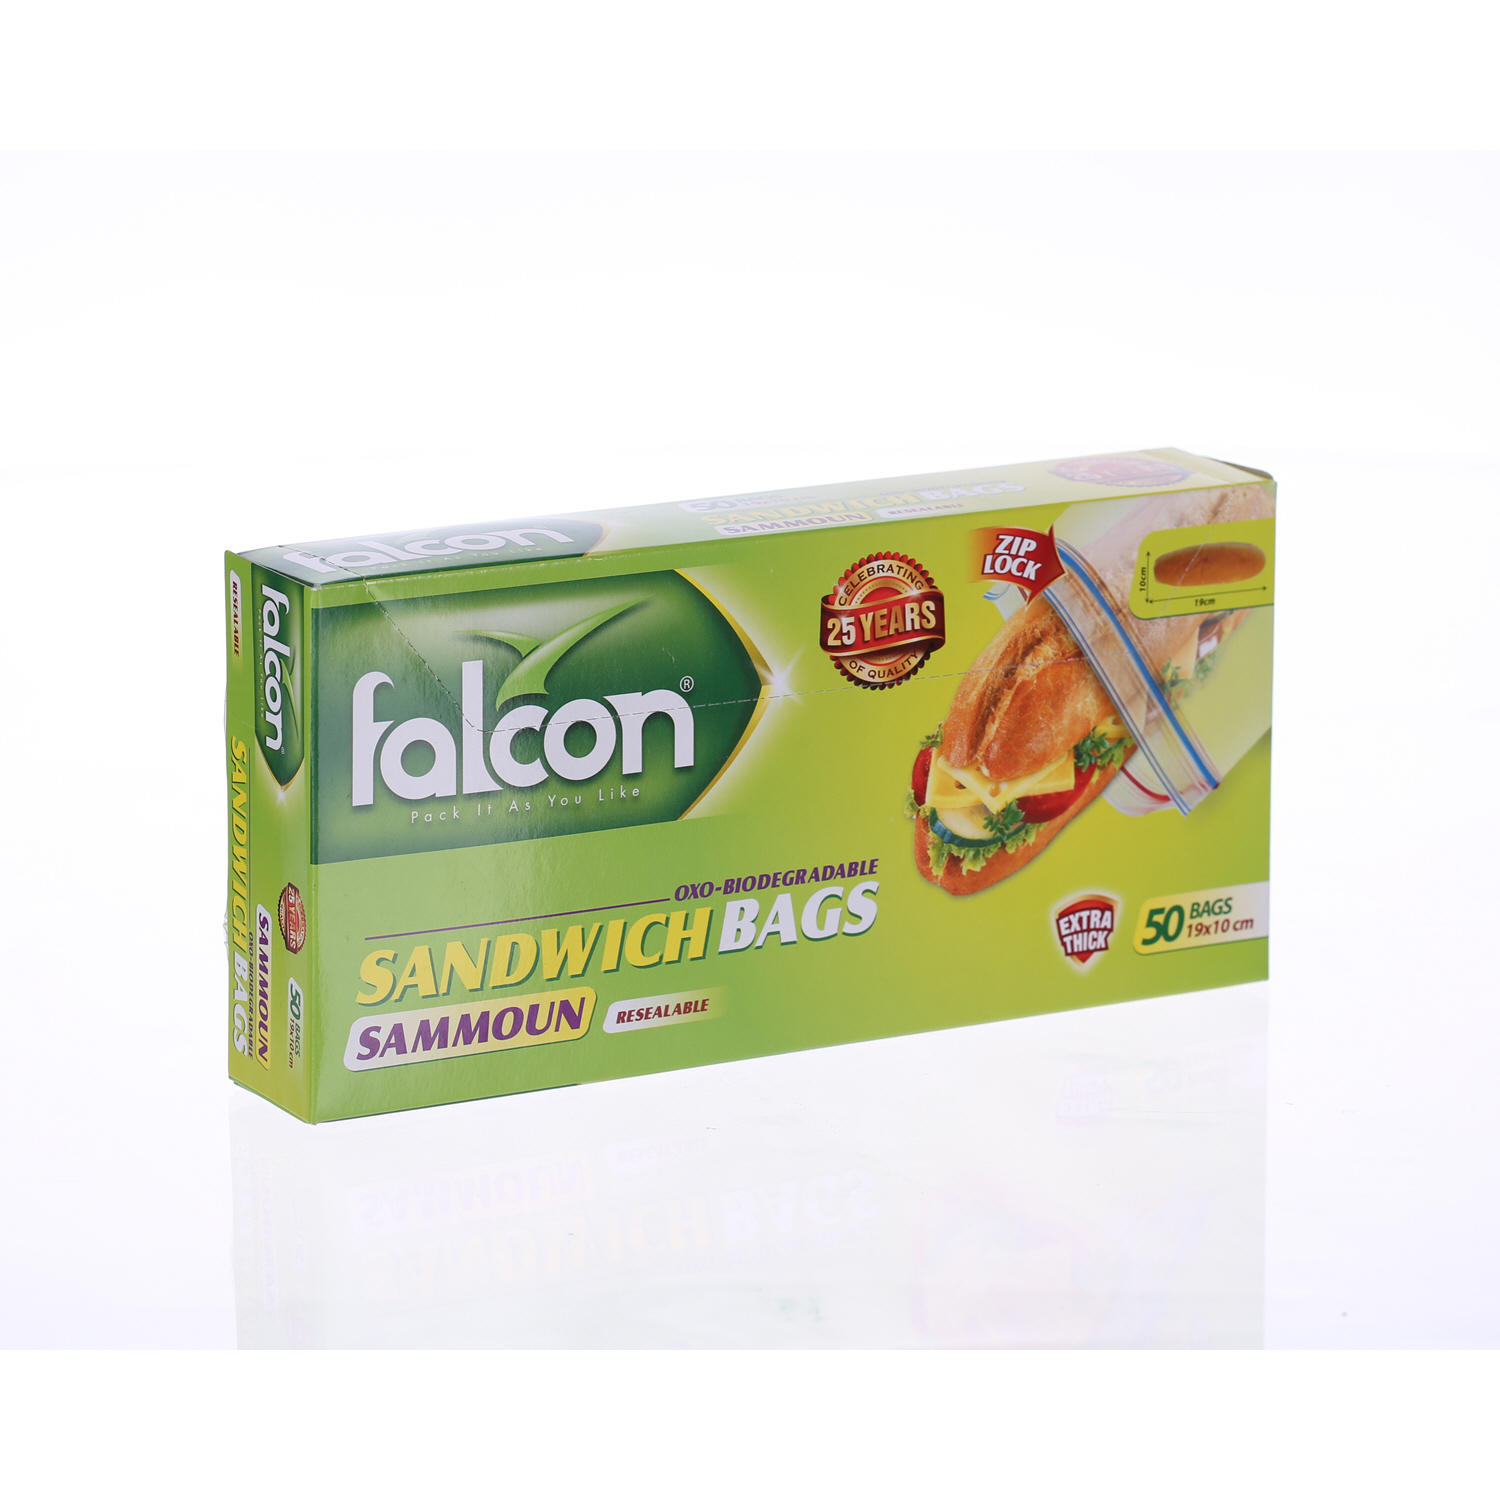 Falcon Samoon Sandwich Bag Small 50 Pack